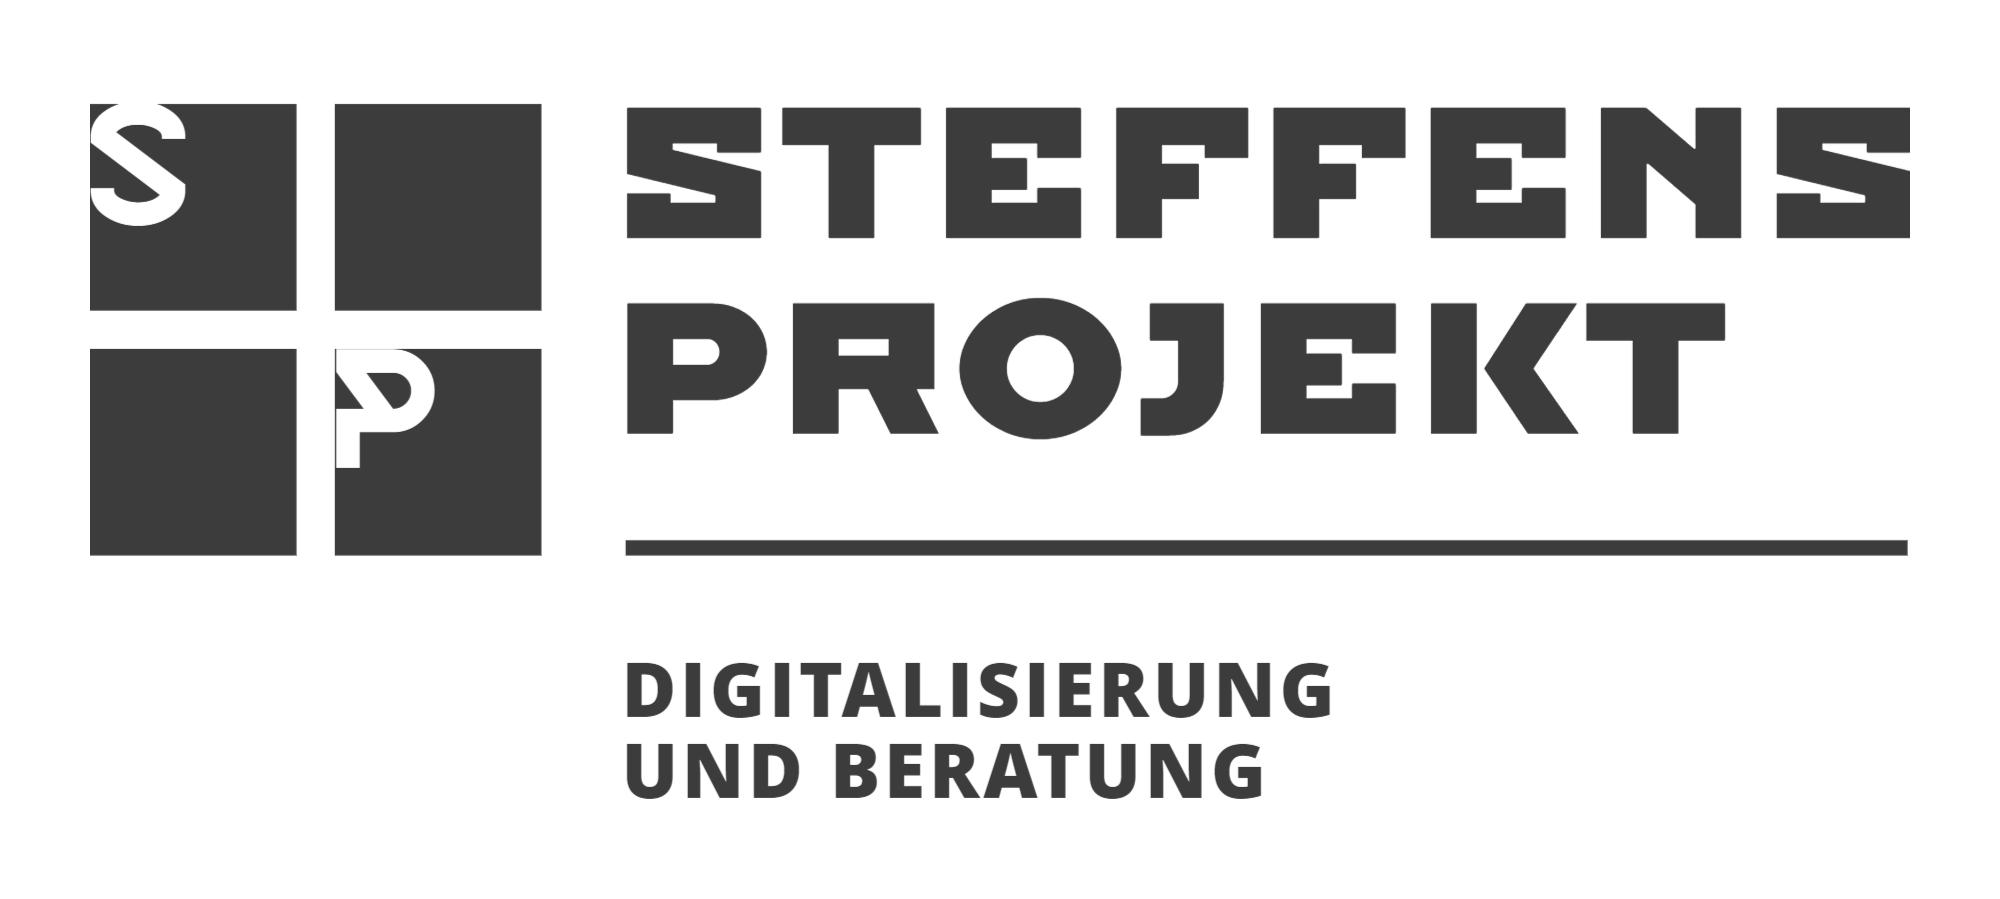 Steffens Projekt Logo